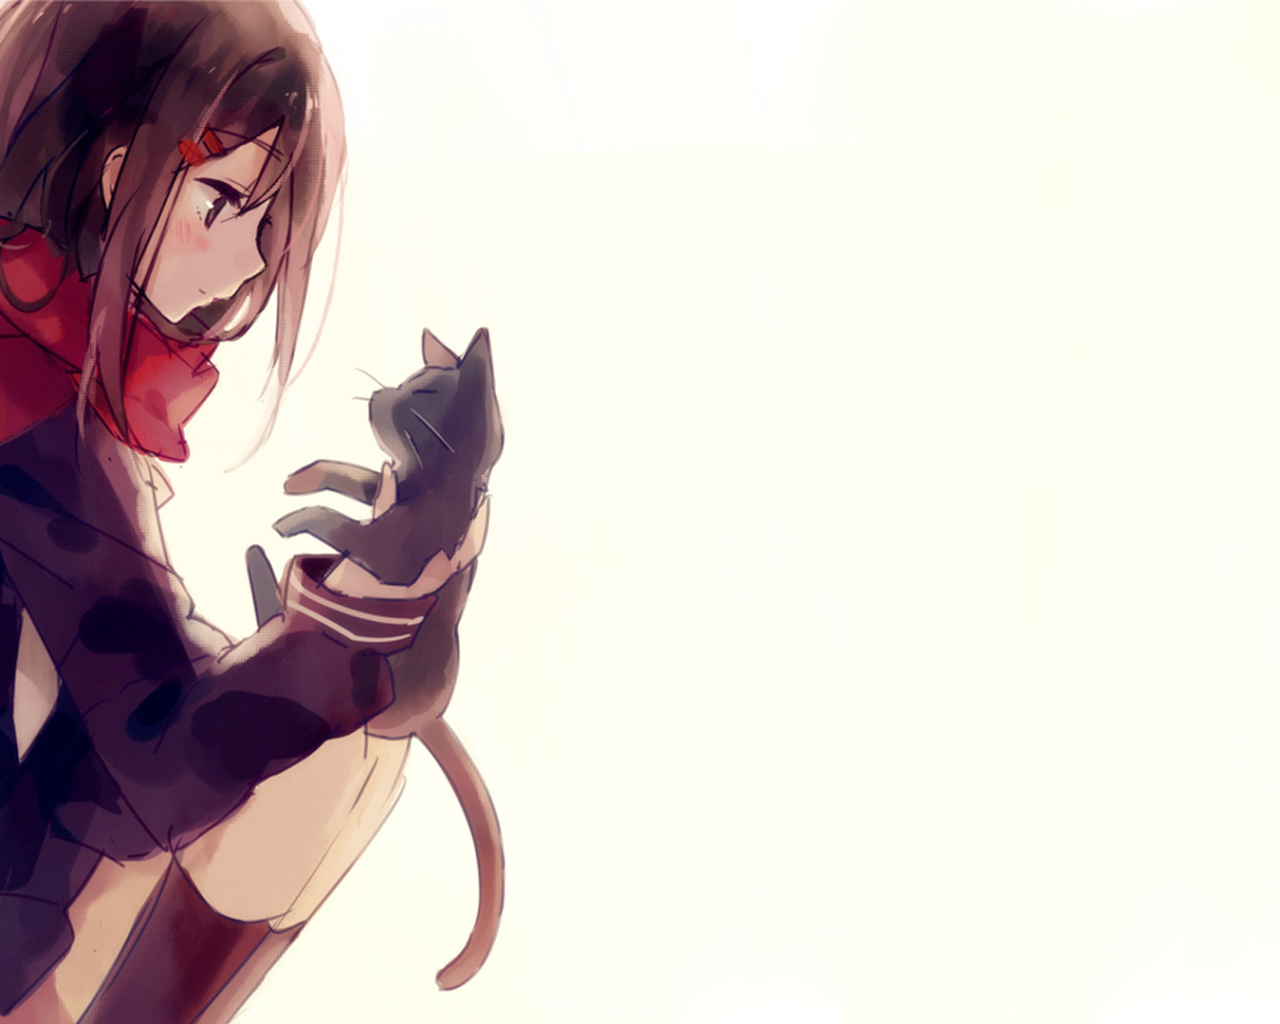 Девушка аниме держит в руке кота, аниме Kagerou Project